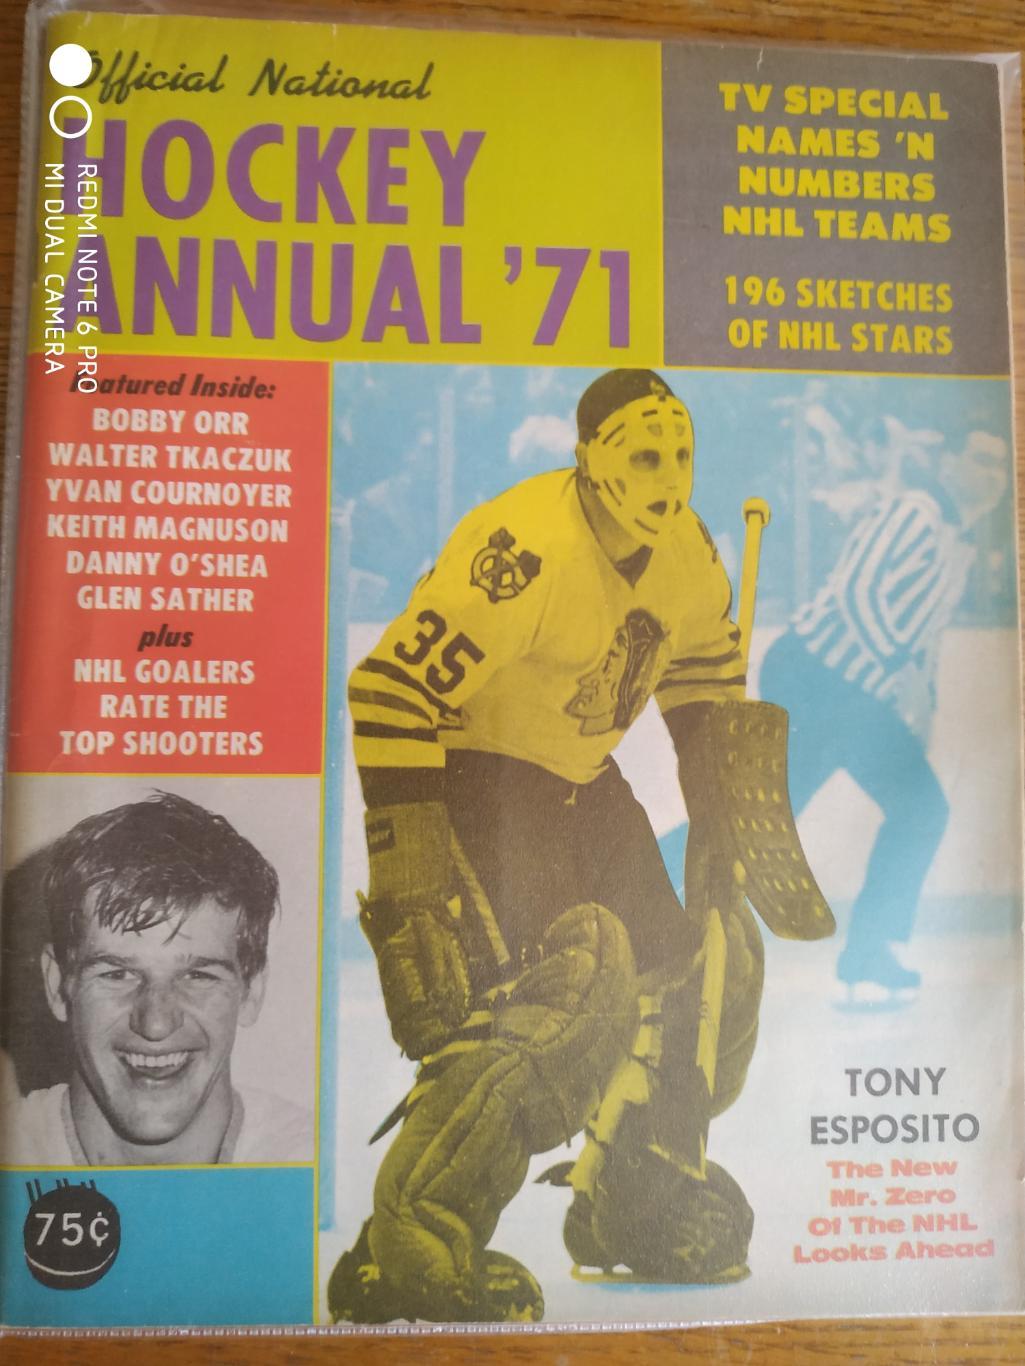 ХОККЕЙ ЕЖЕГОДНИК НХЛ NHL 1971 OFFICIAL NATIONAL HOCKEY ANNUAL